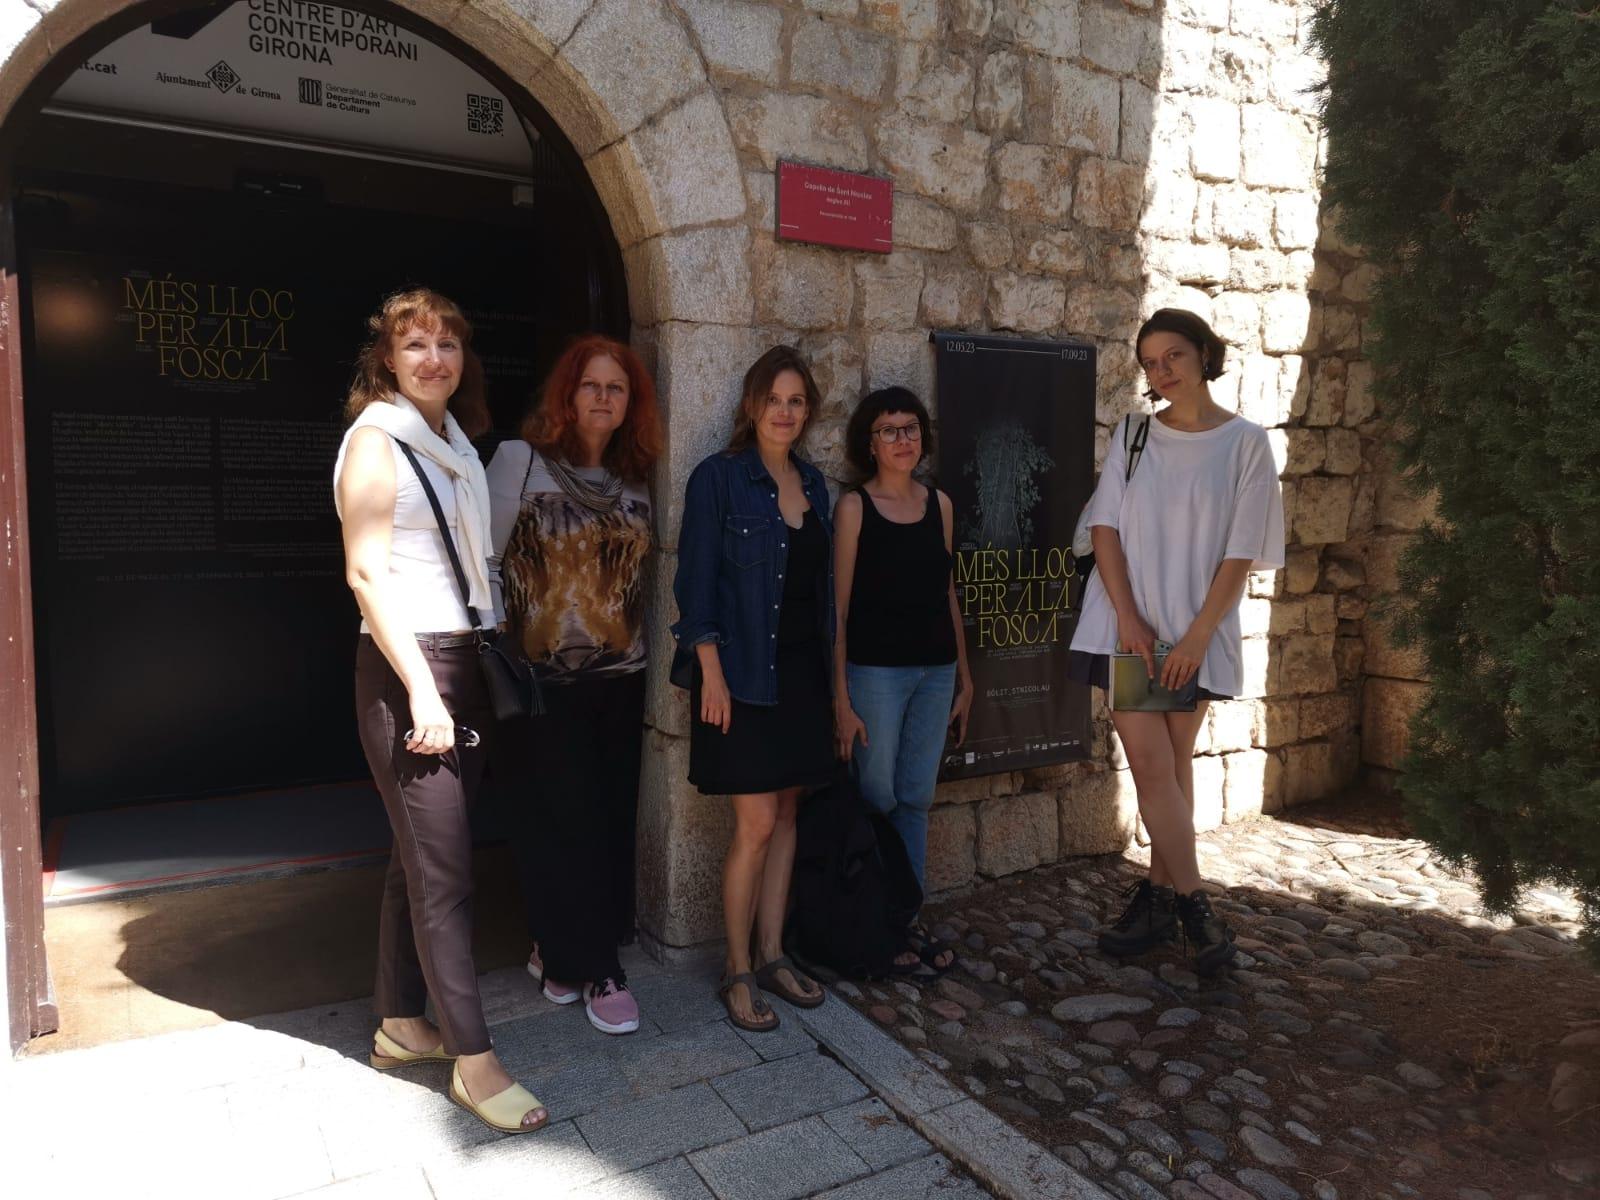 The Ukrainian women visit the Bòlit de Girona